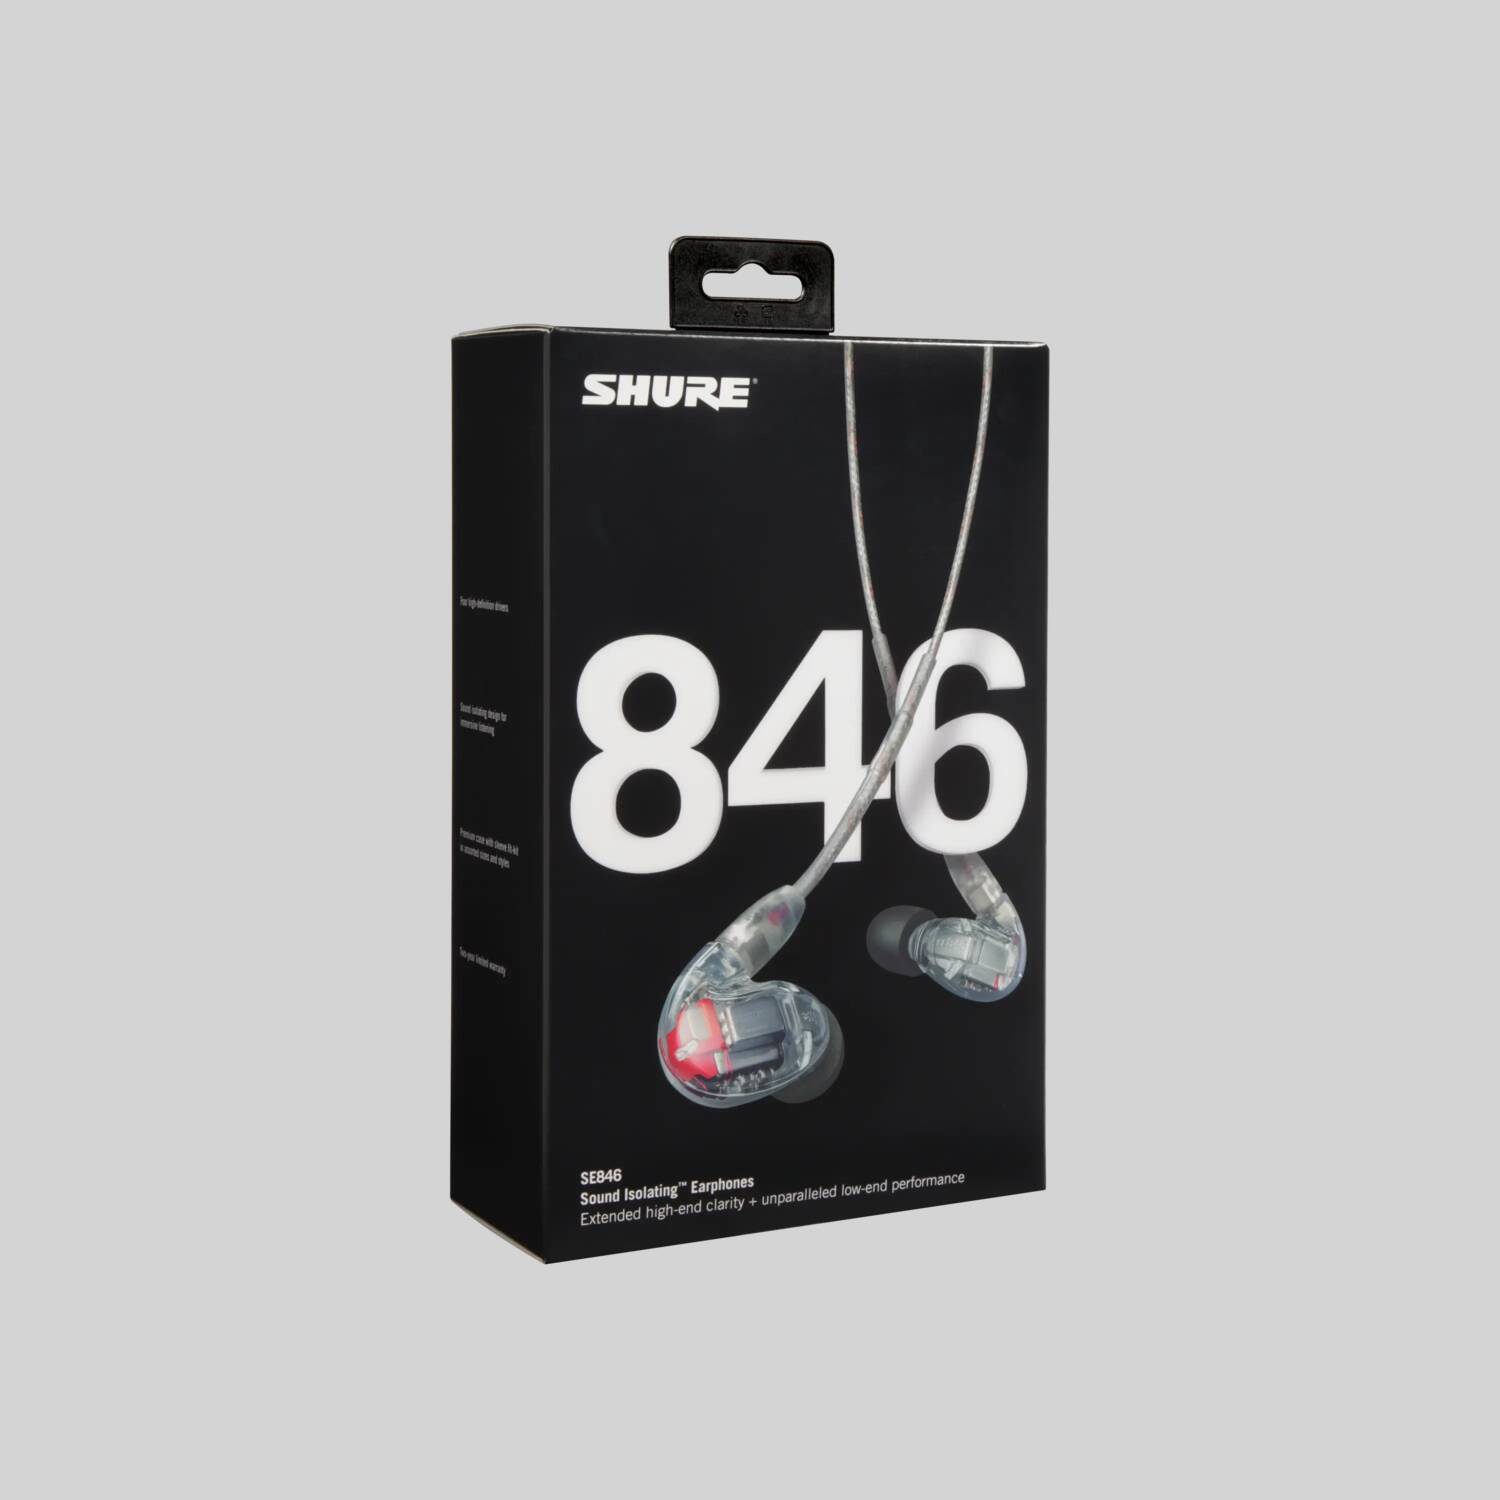 SE846 Pro - Professional Sound Isolating™ Earphones - Shure